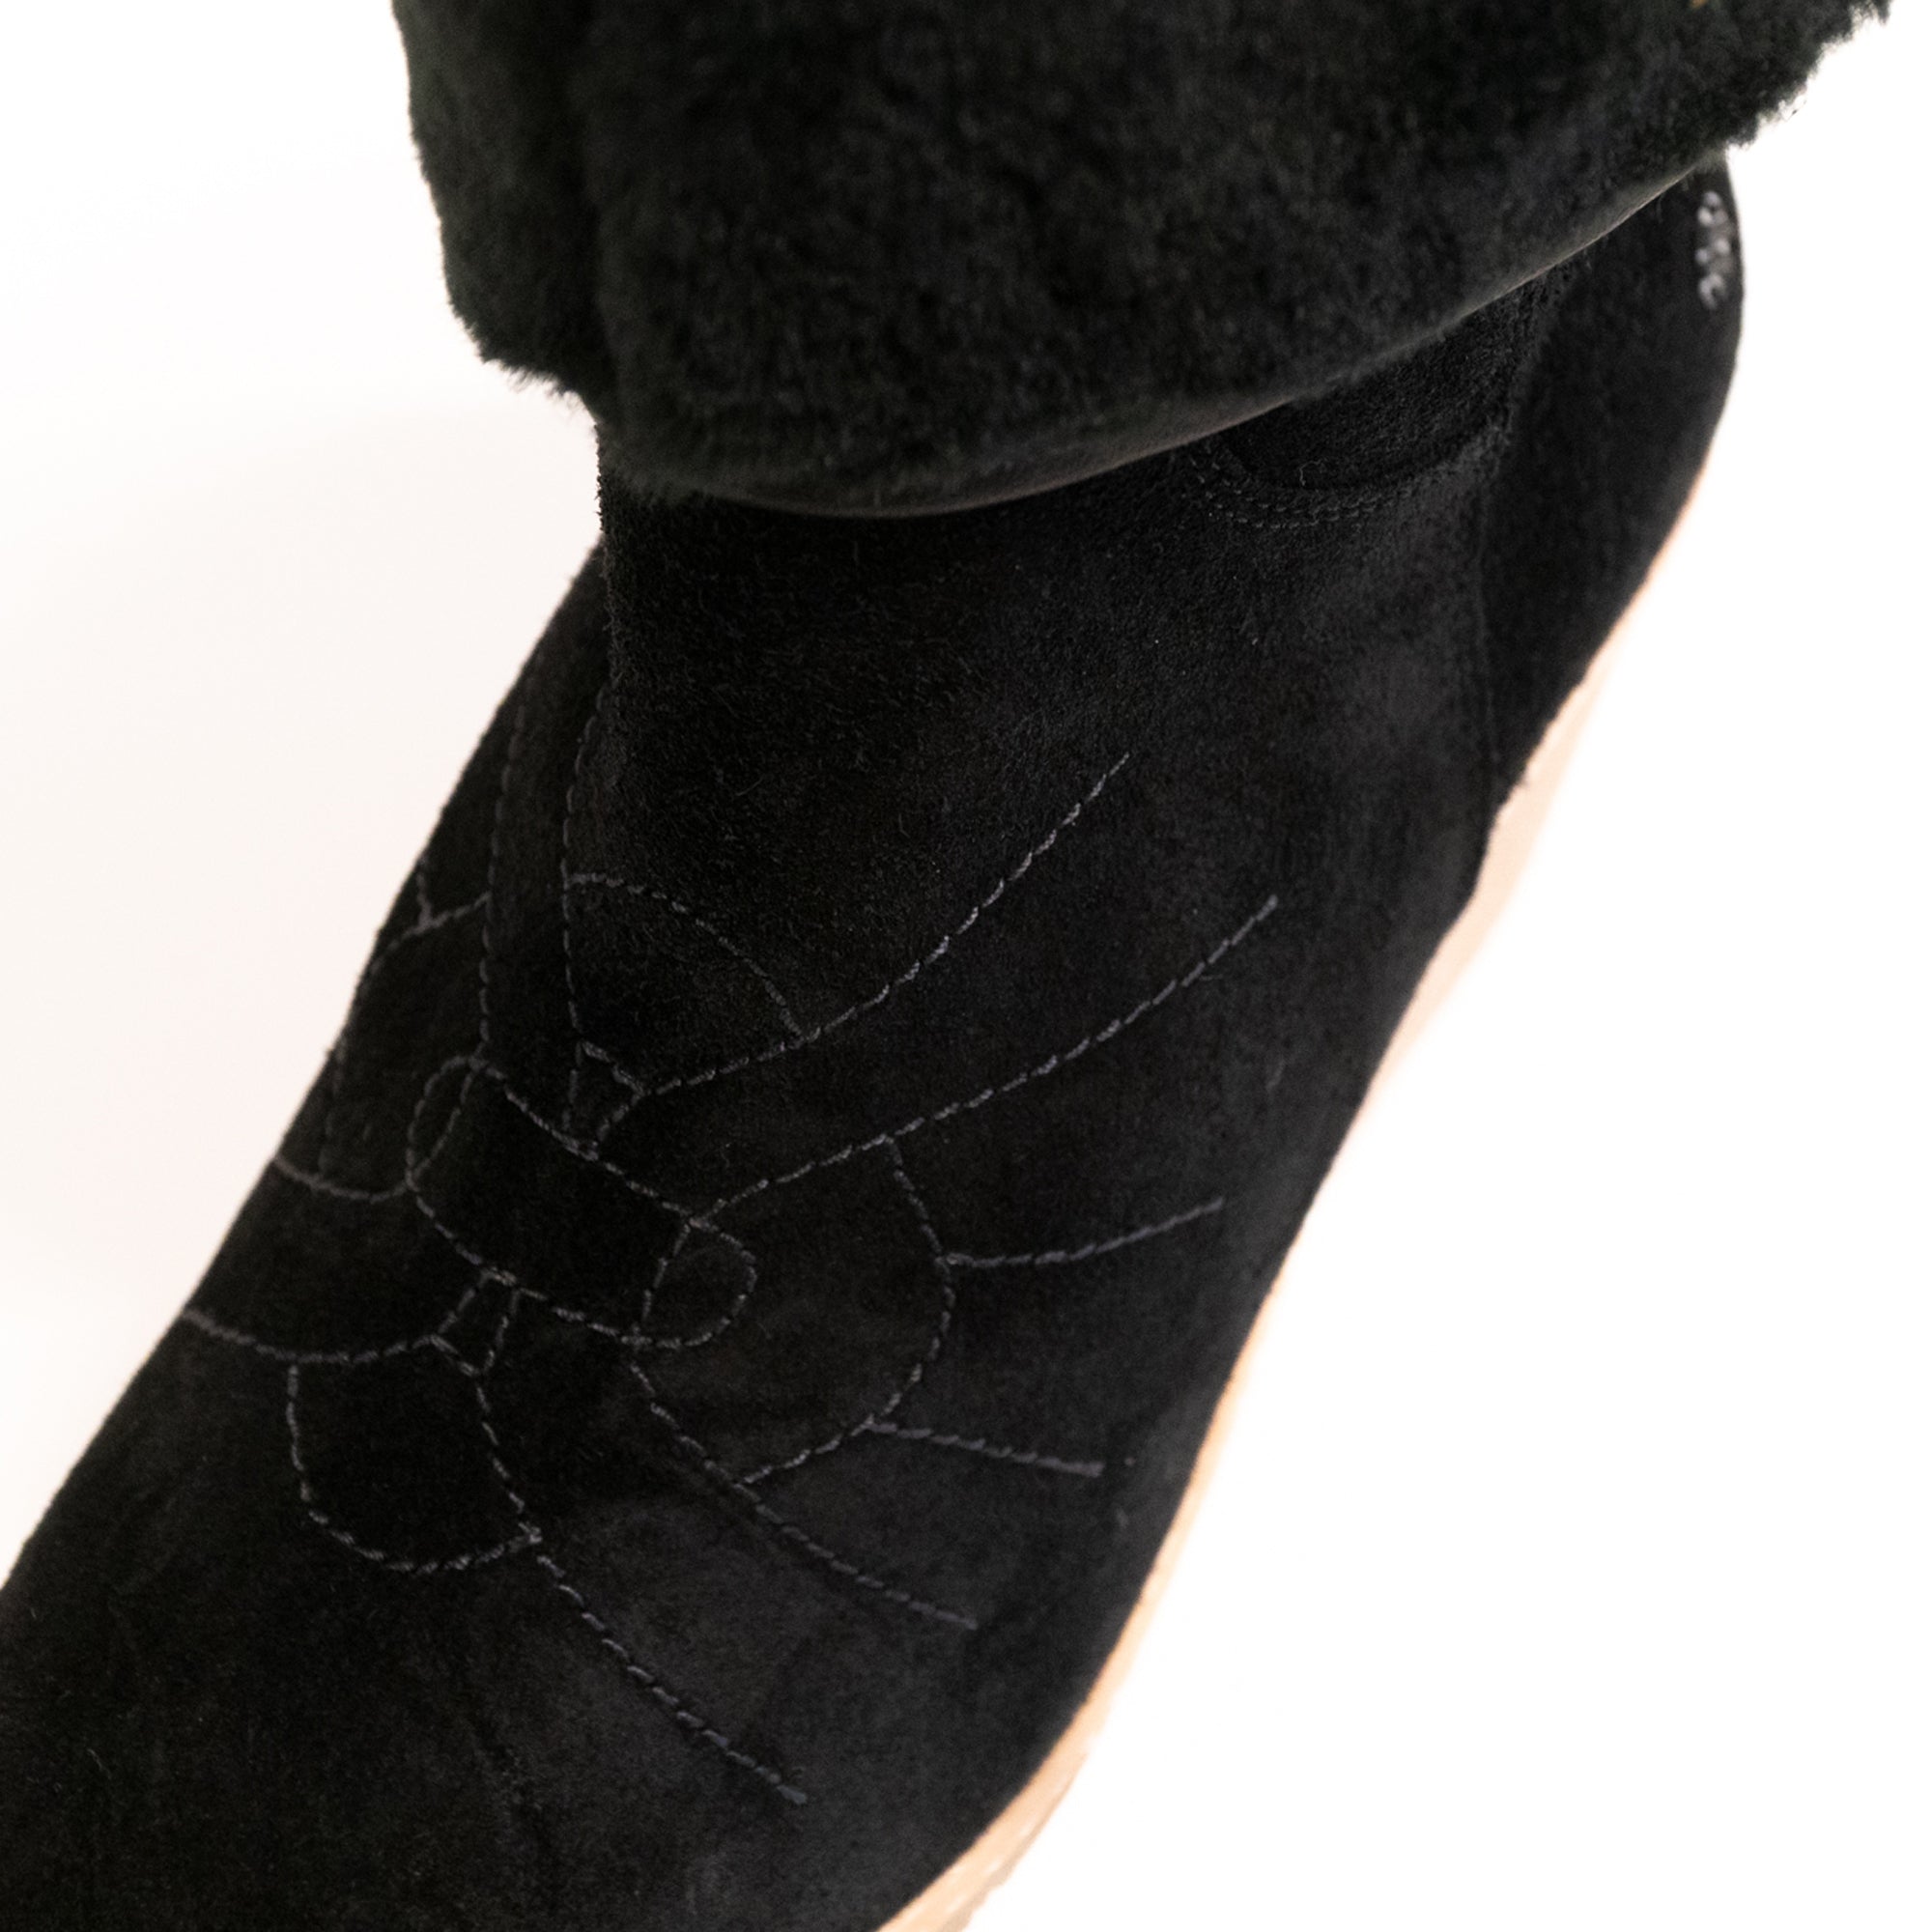 Kunoka CAROLE ankle boot - Raven Ankle Boot black